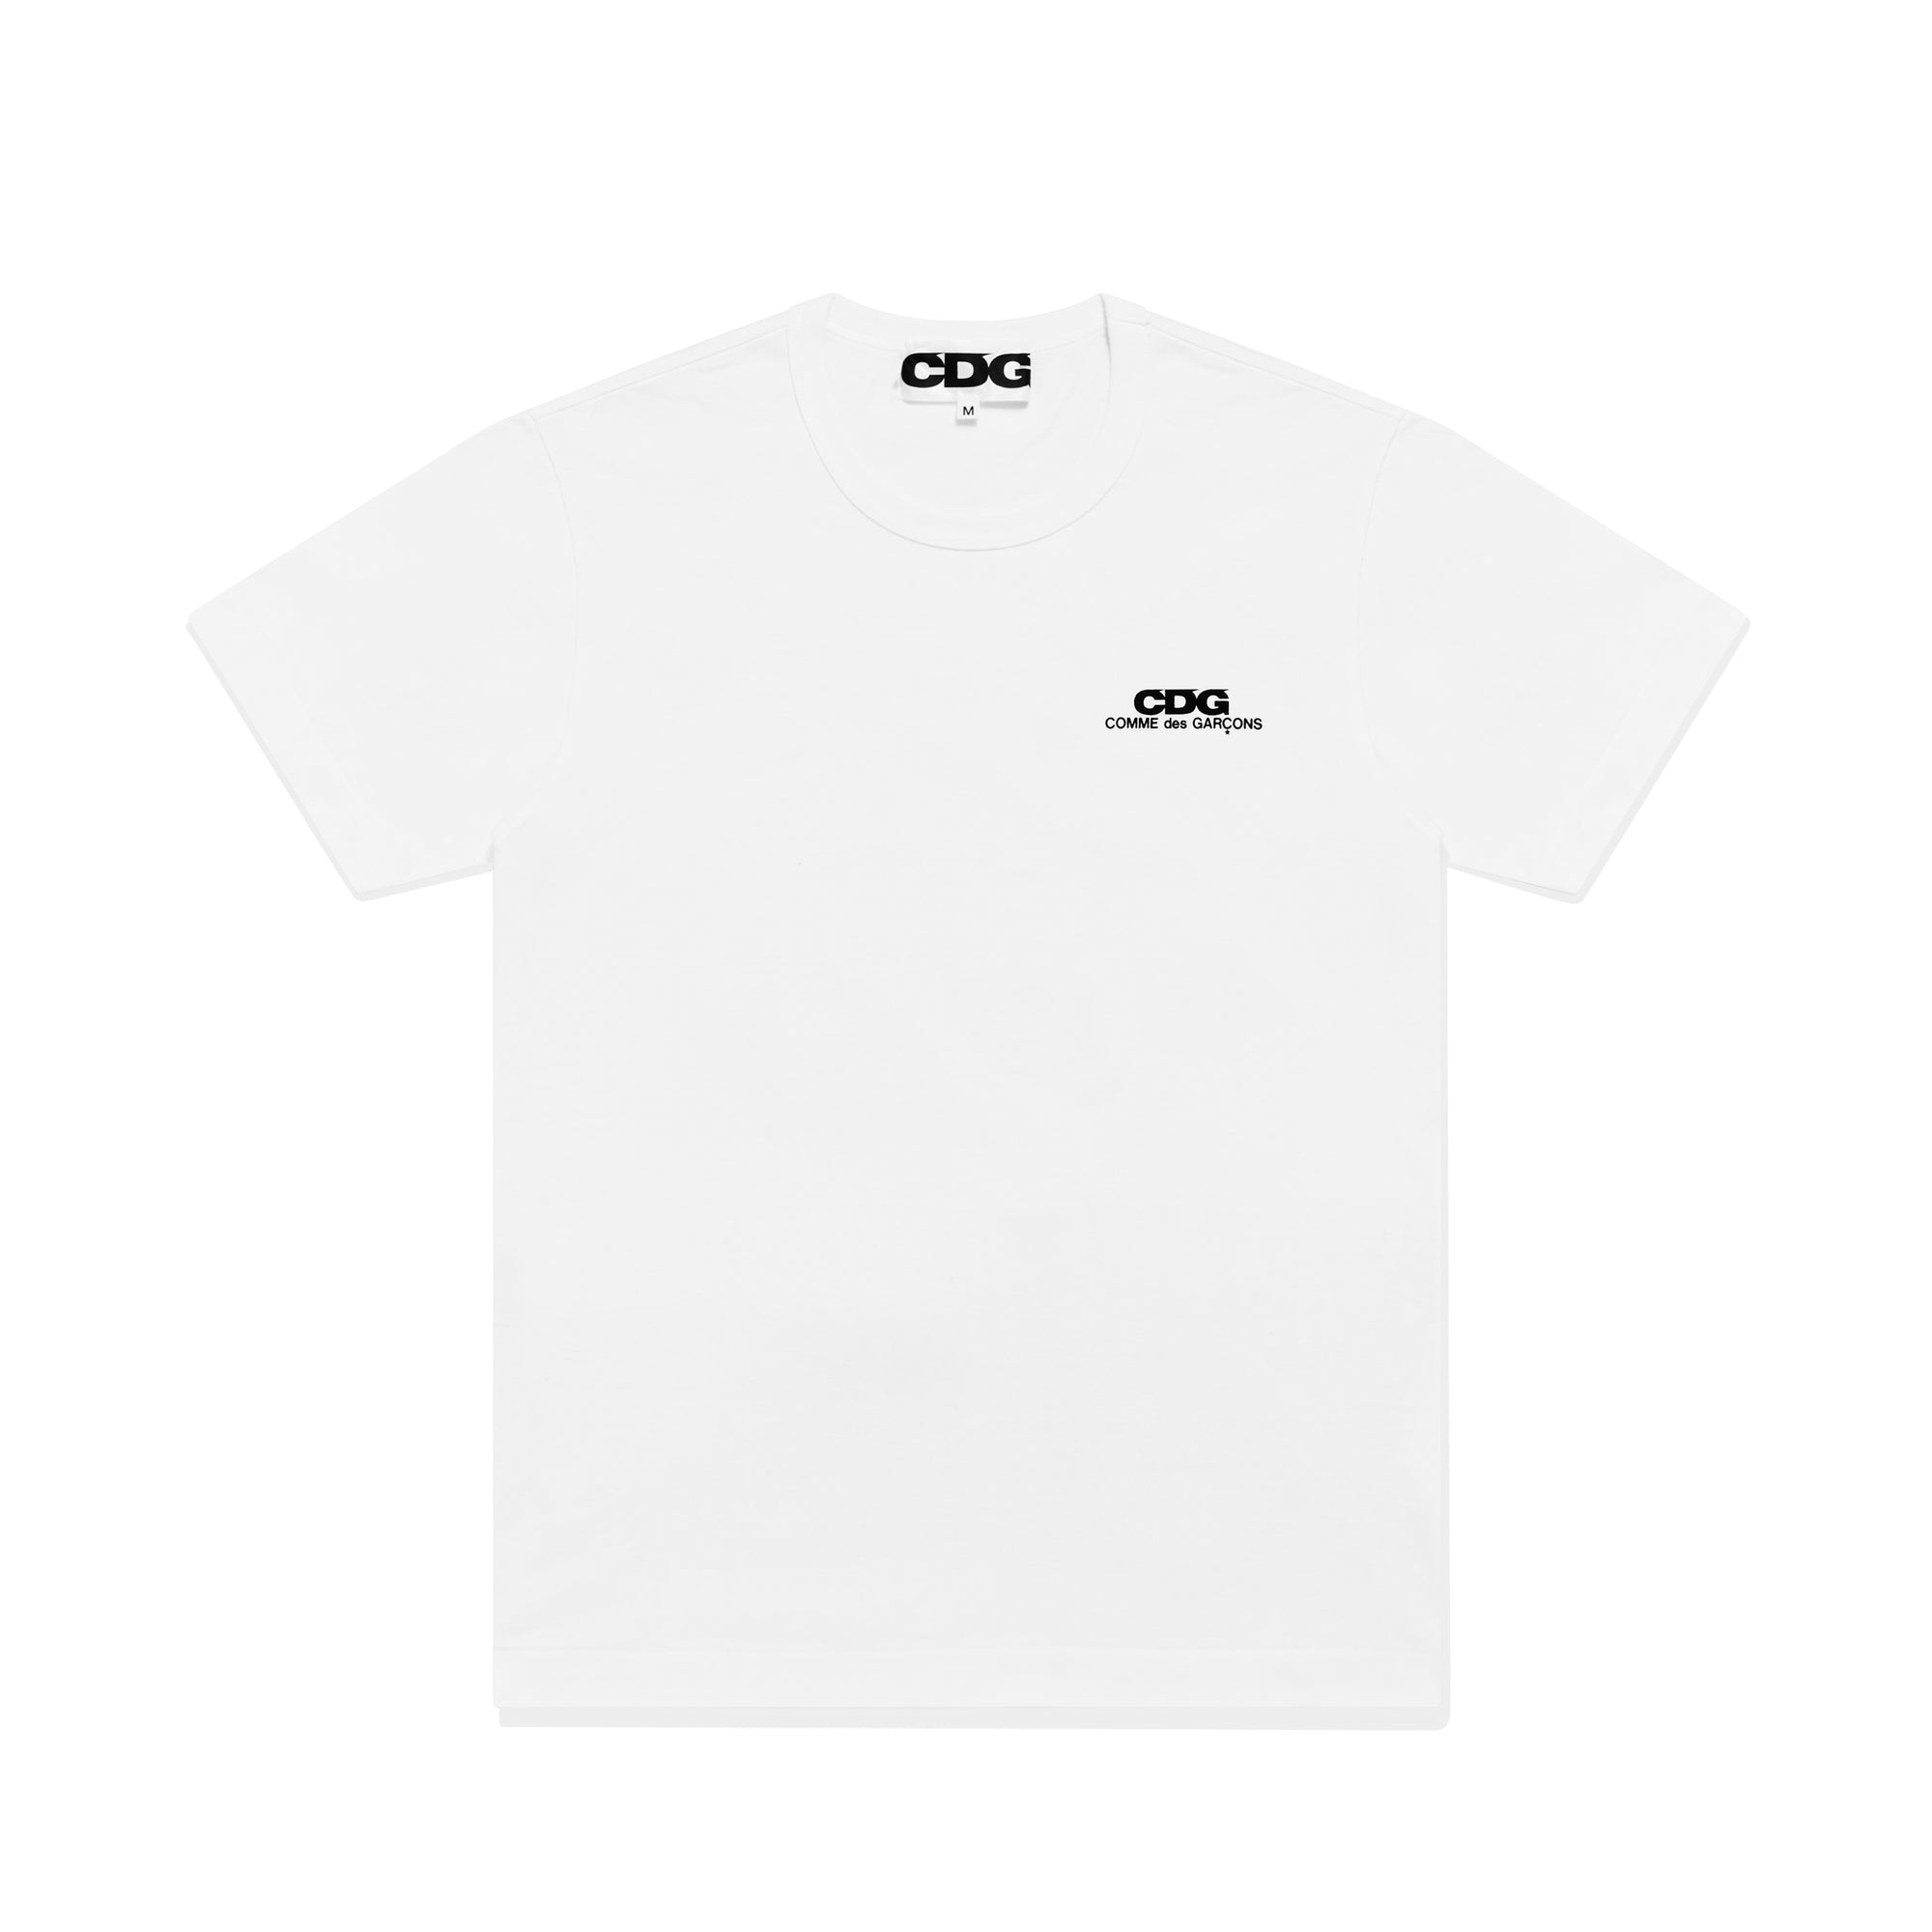 CDG - Small Logo T-Shirt - (White) view 1